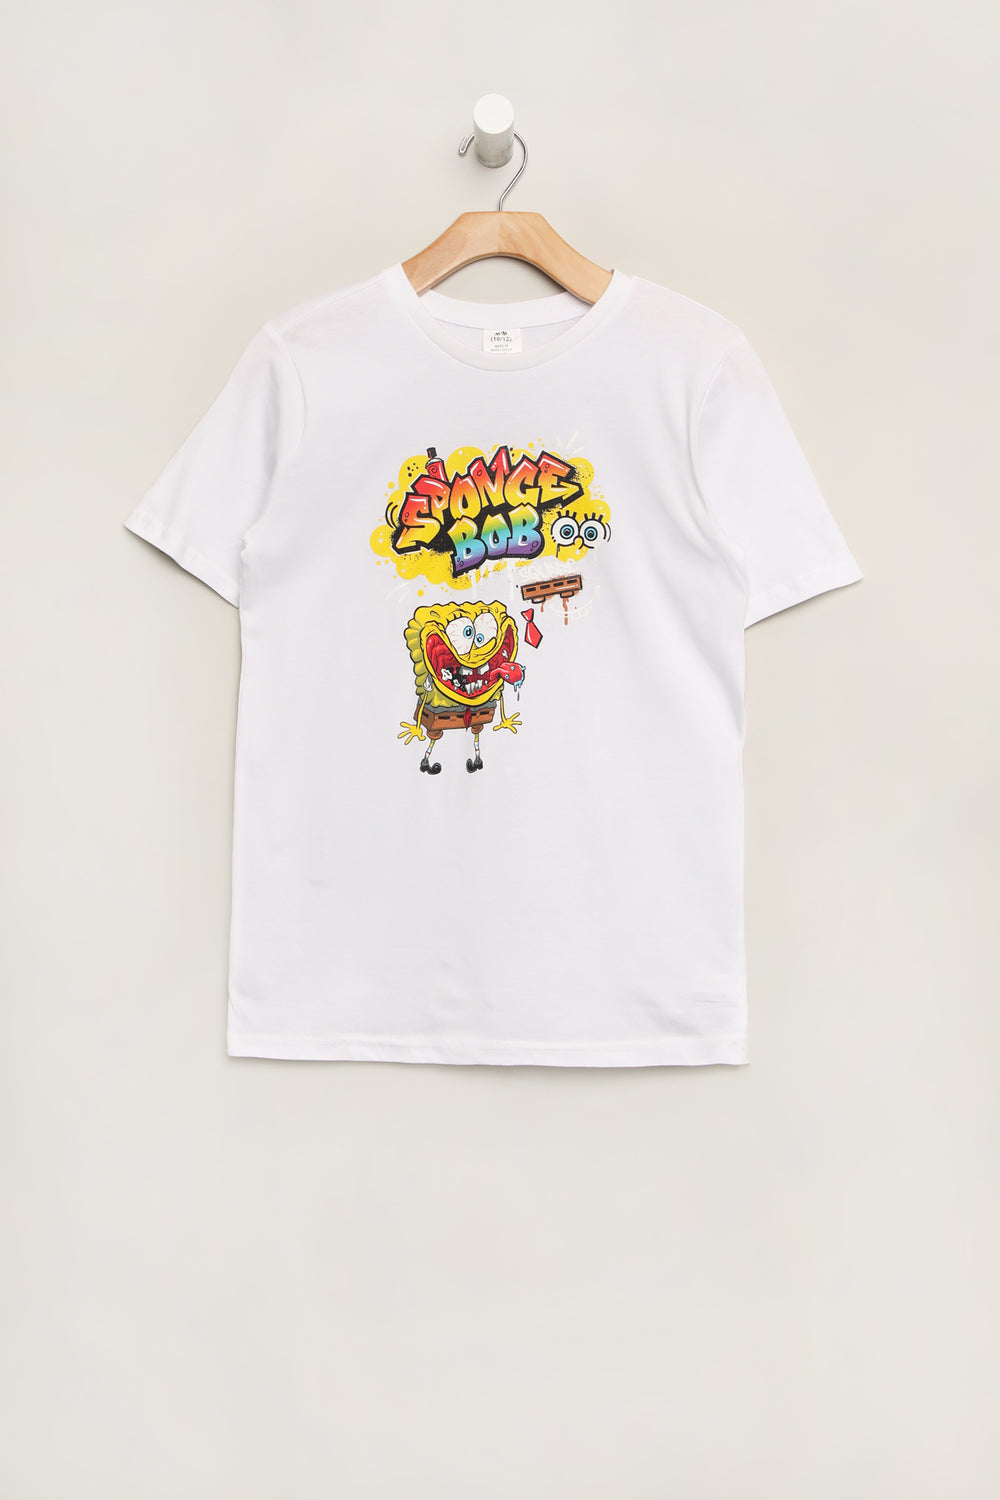 Youth SpongeBob Graffiti T-Shirt Youth SpongeBob Graffiti T-Shirt